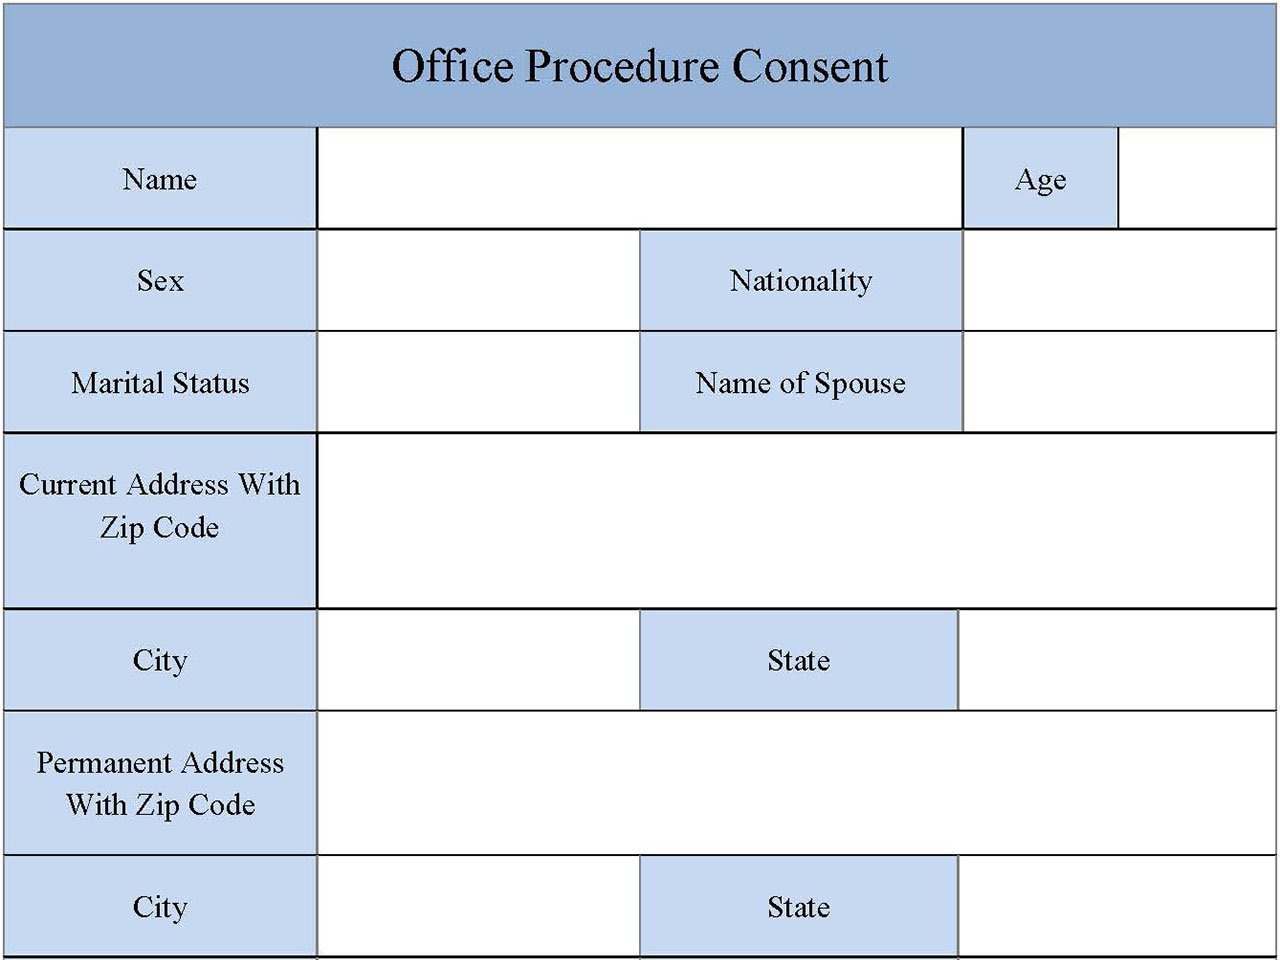 Office Procedure Consent Form